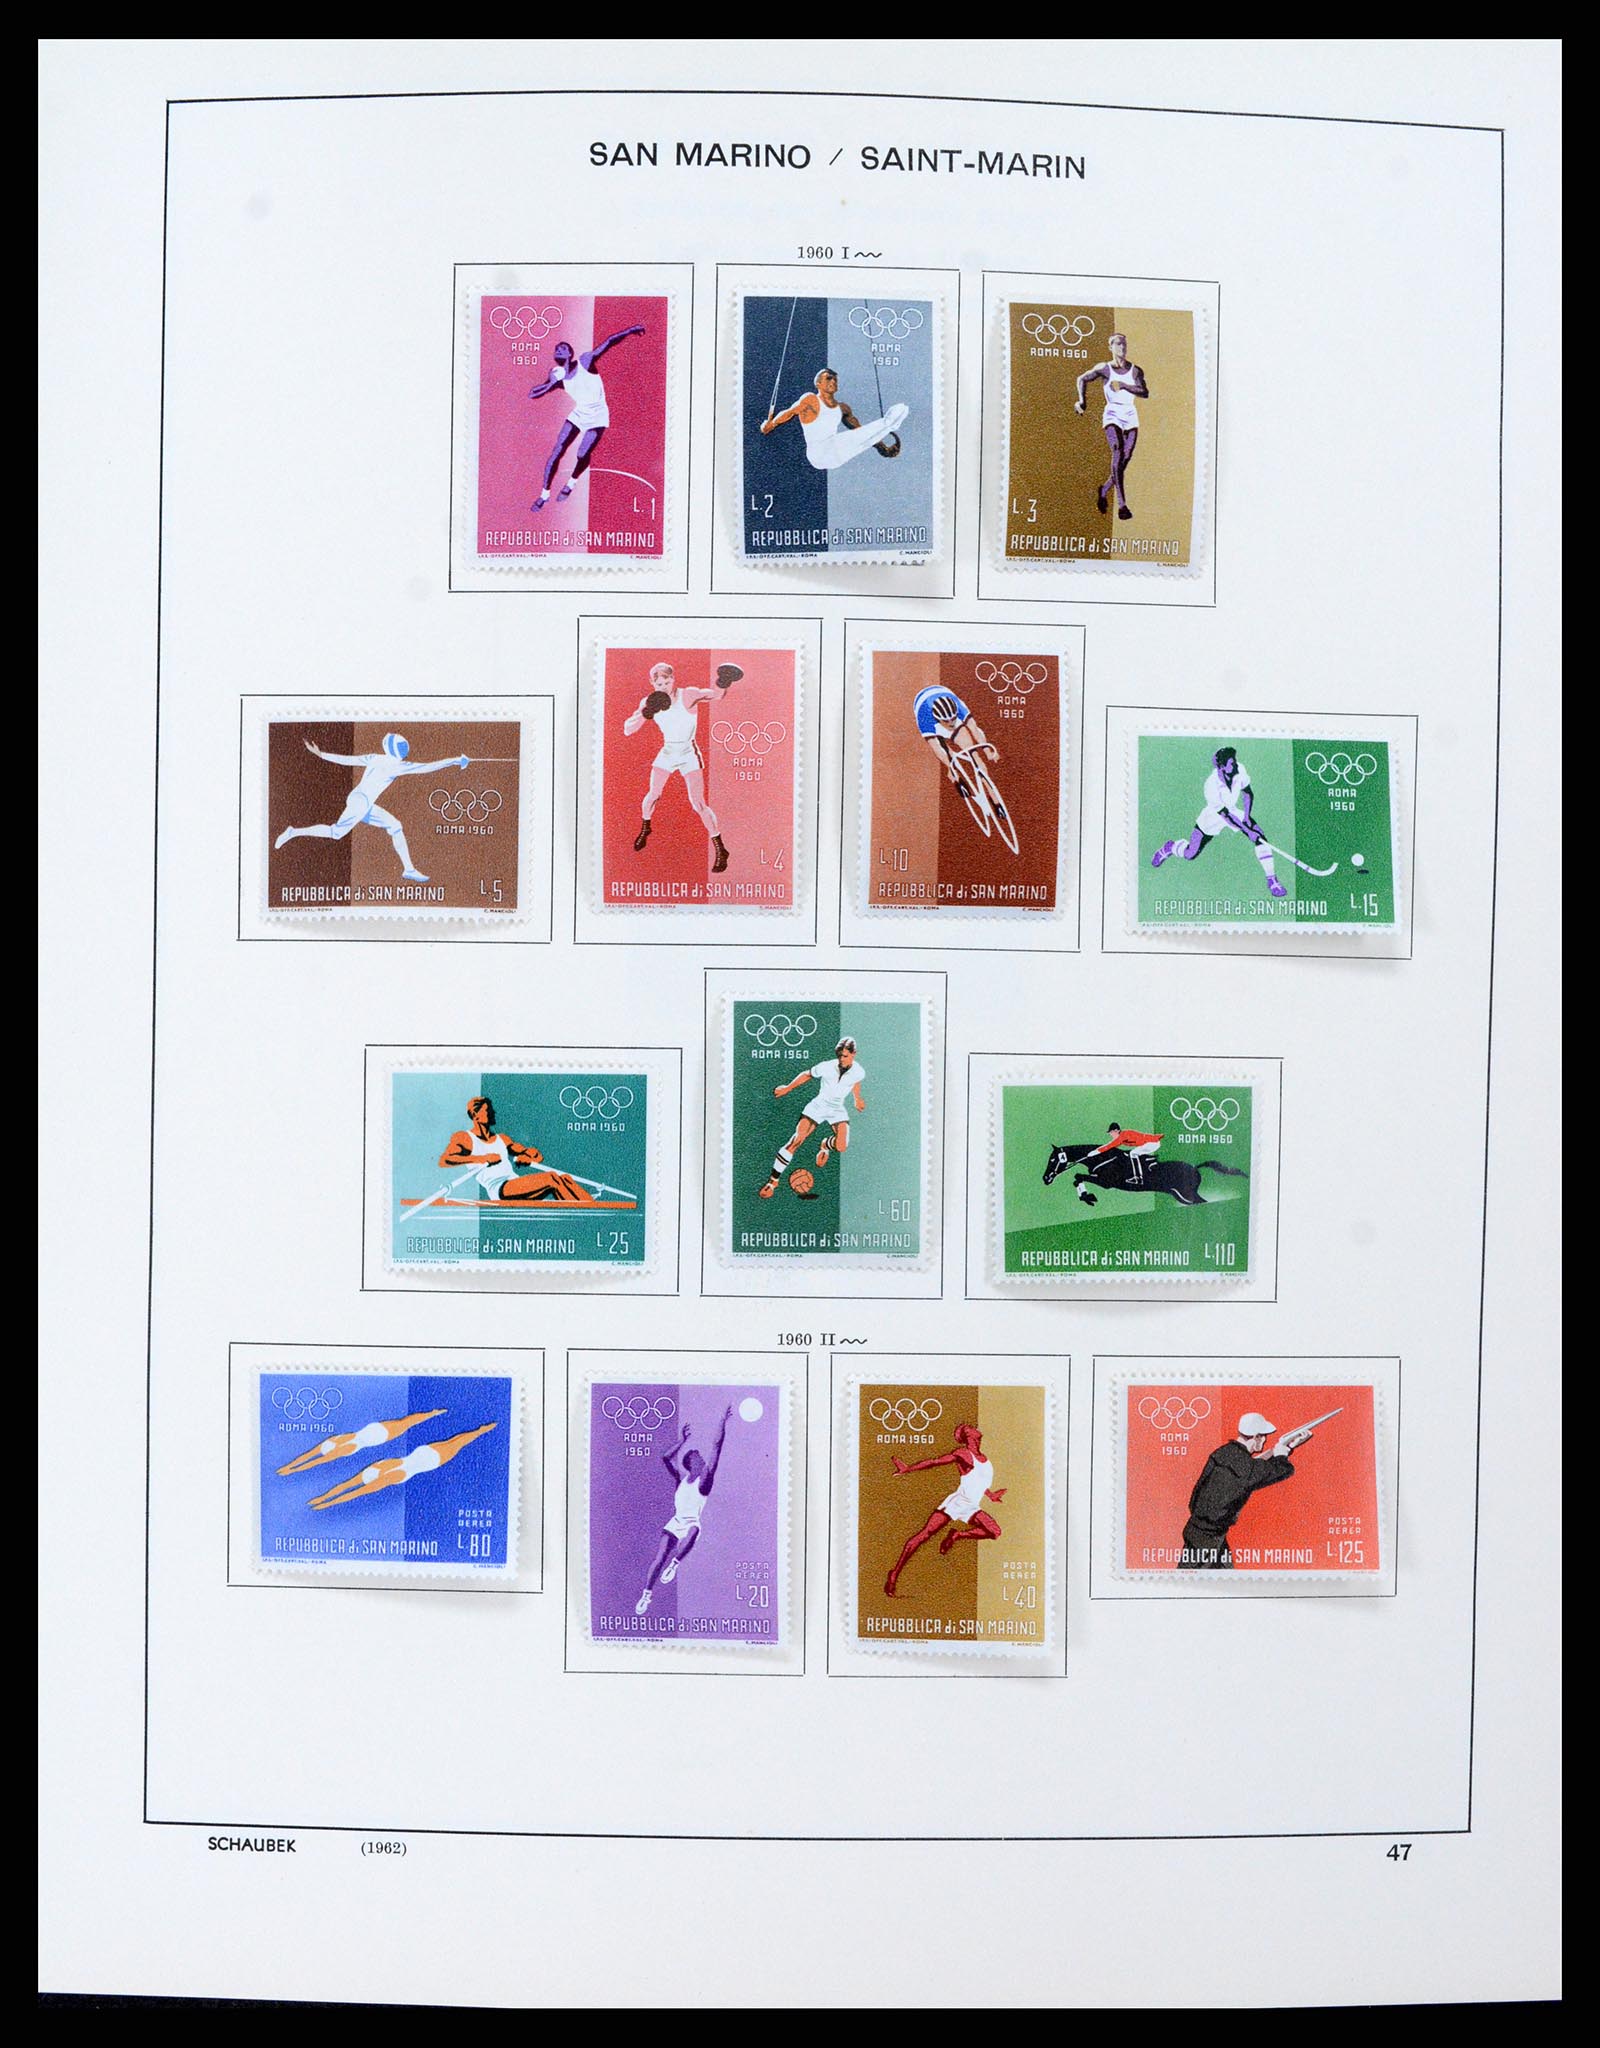 37556 048 - Stamp collection 37556 San Marino 1877-2017.